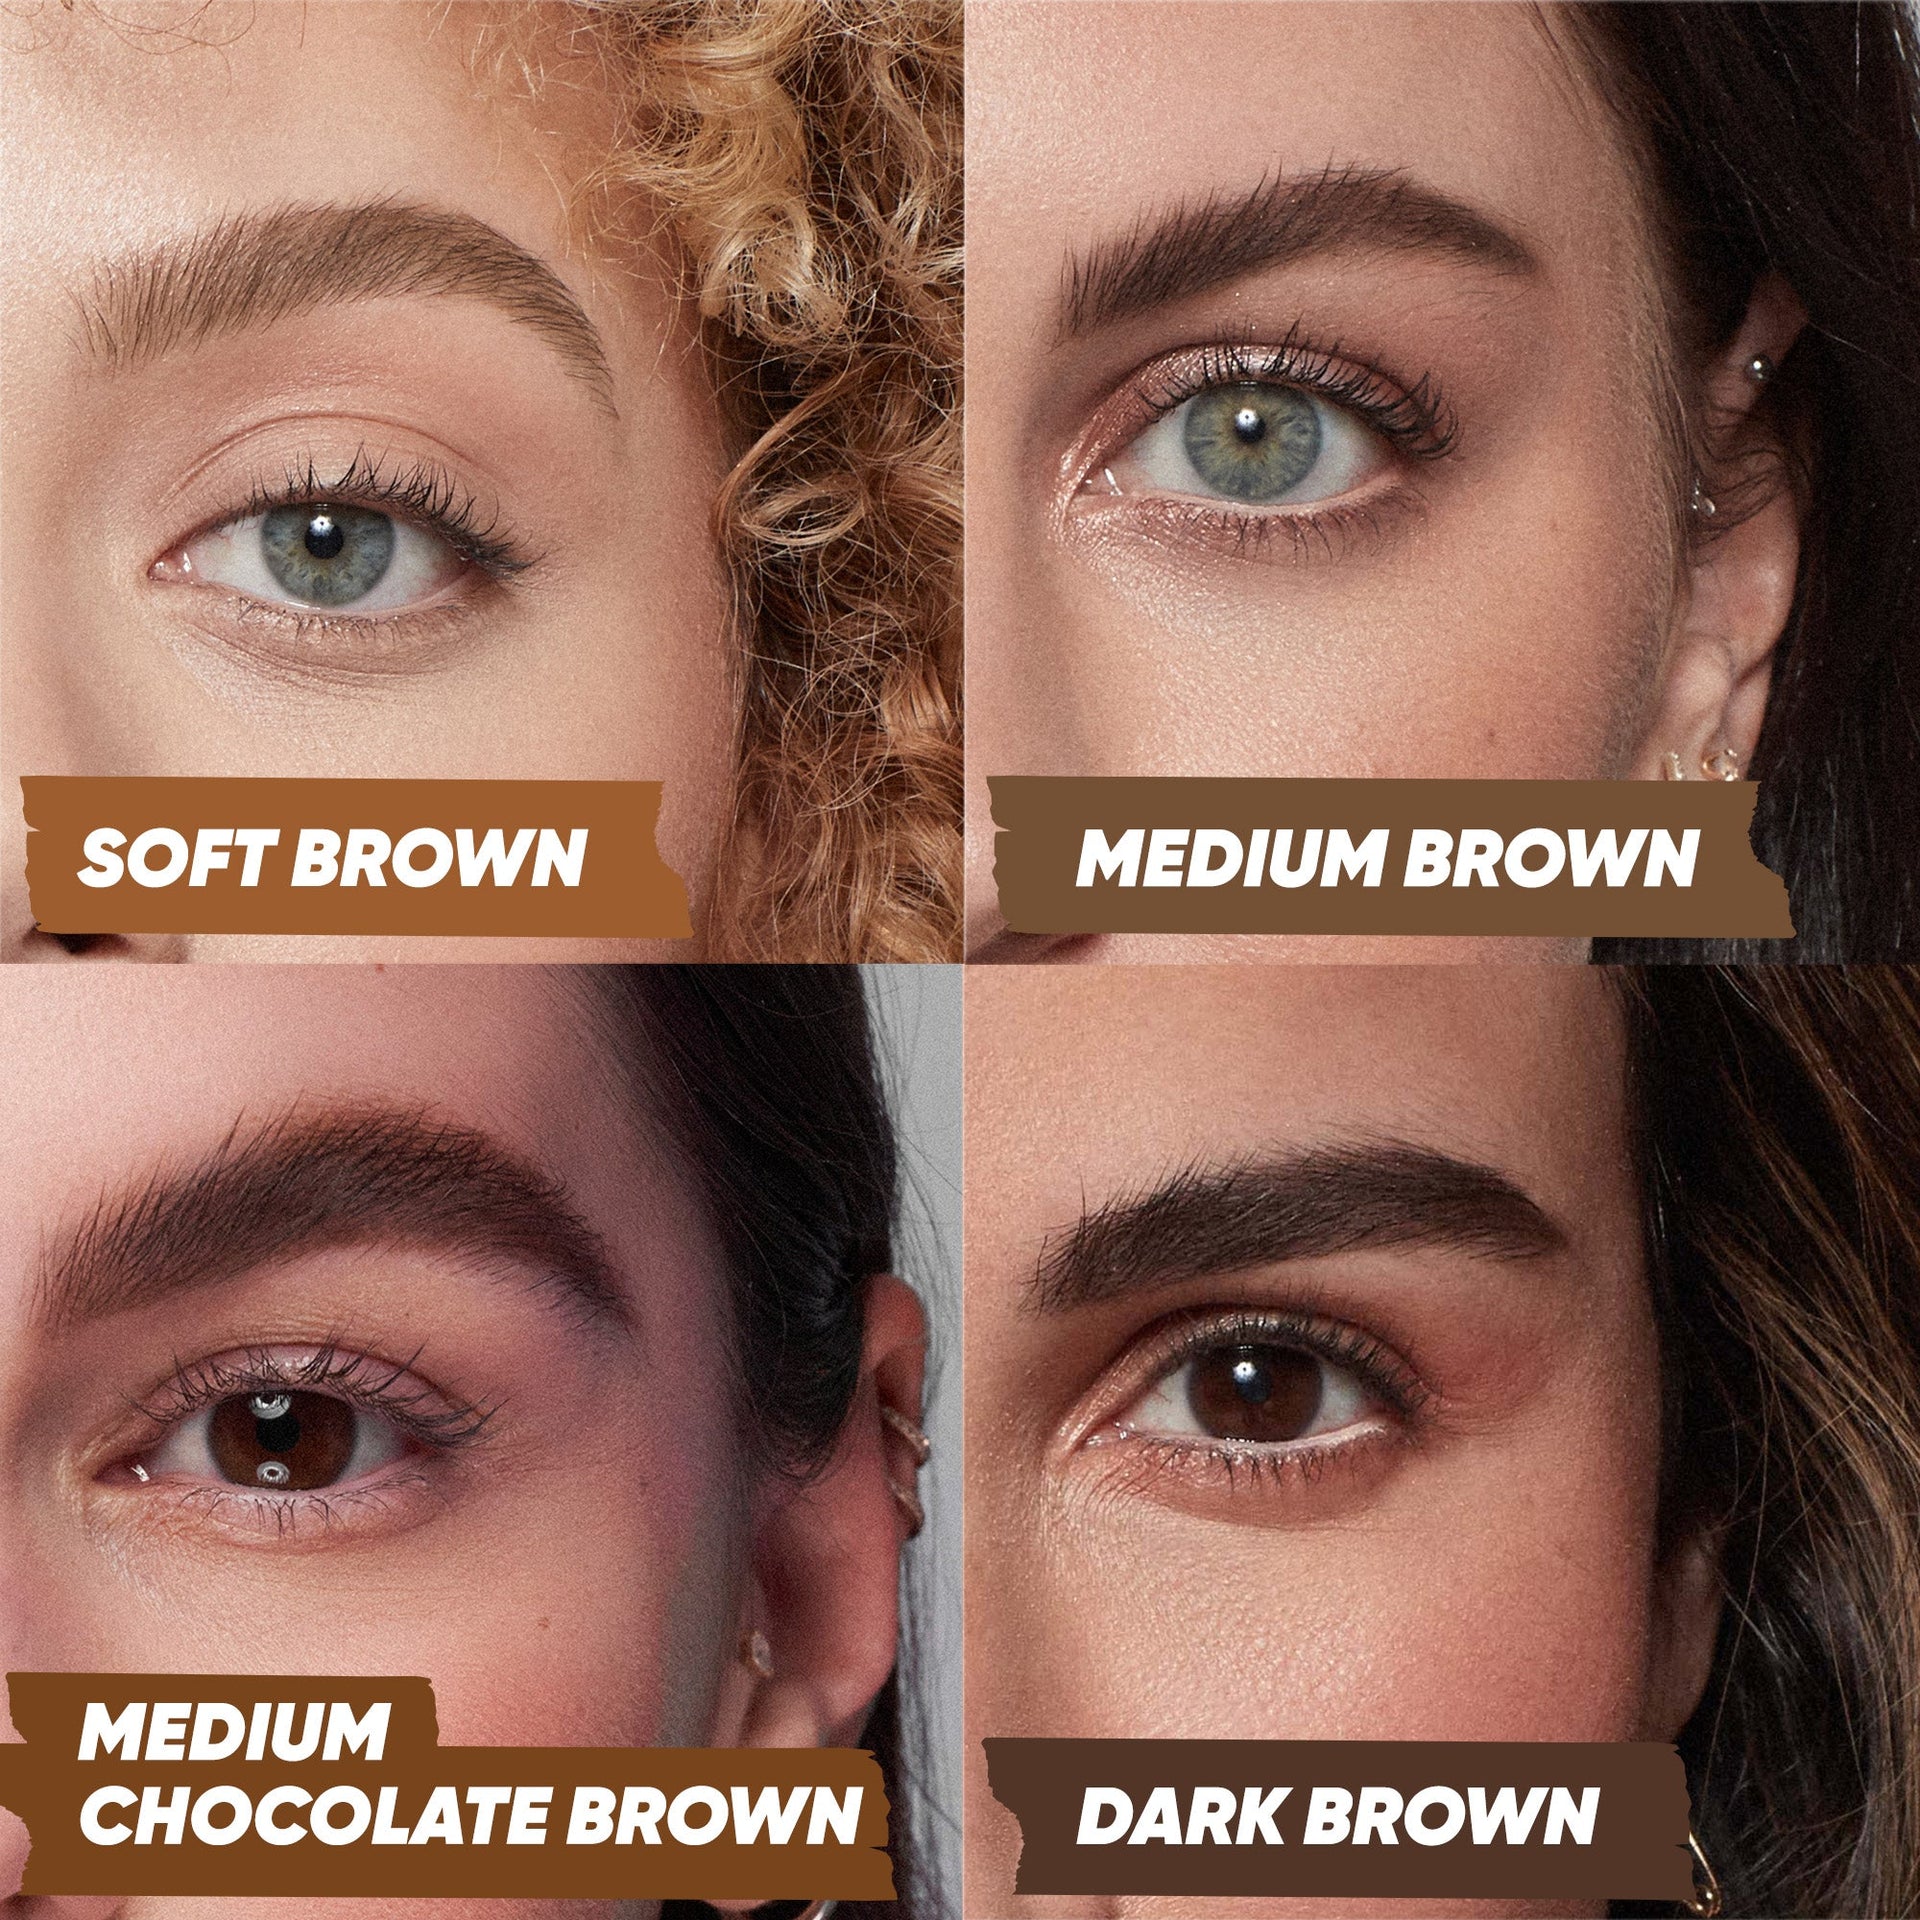 An Image Showing Kosas BrowPop Shades When Applied. Soft Brown, Medium Brown, Medium Chocolate Brown, Dark Brown.